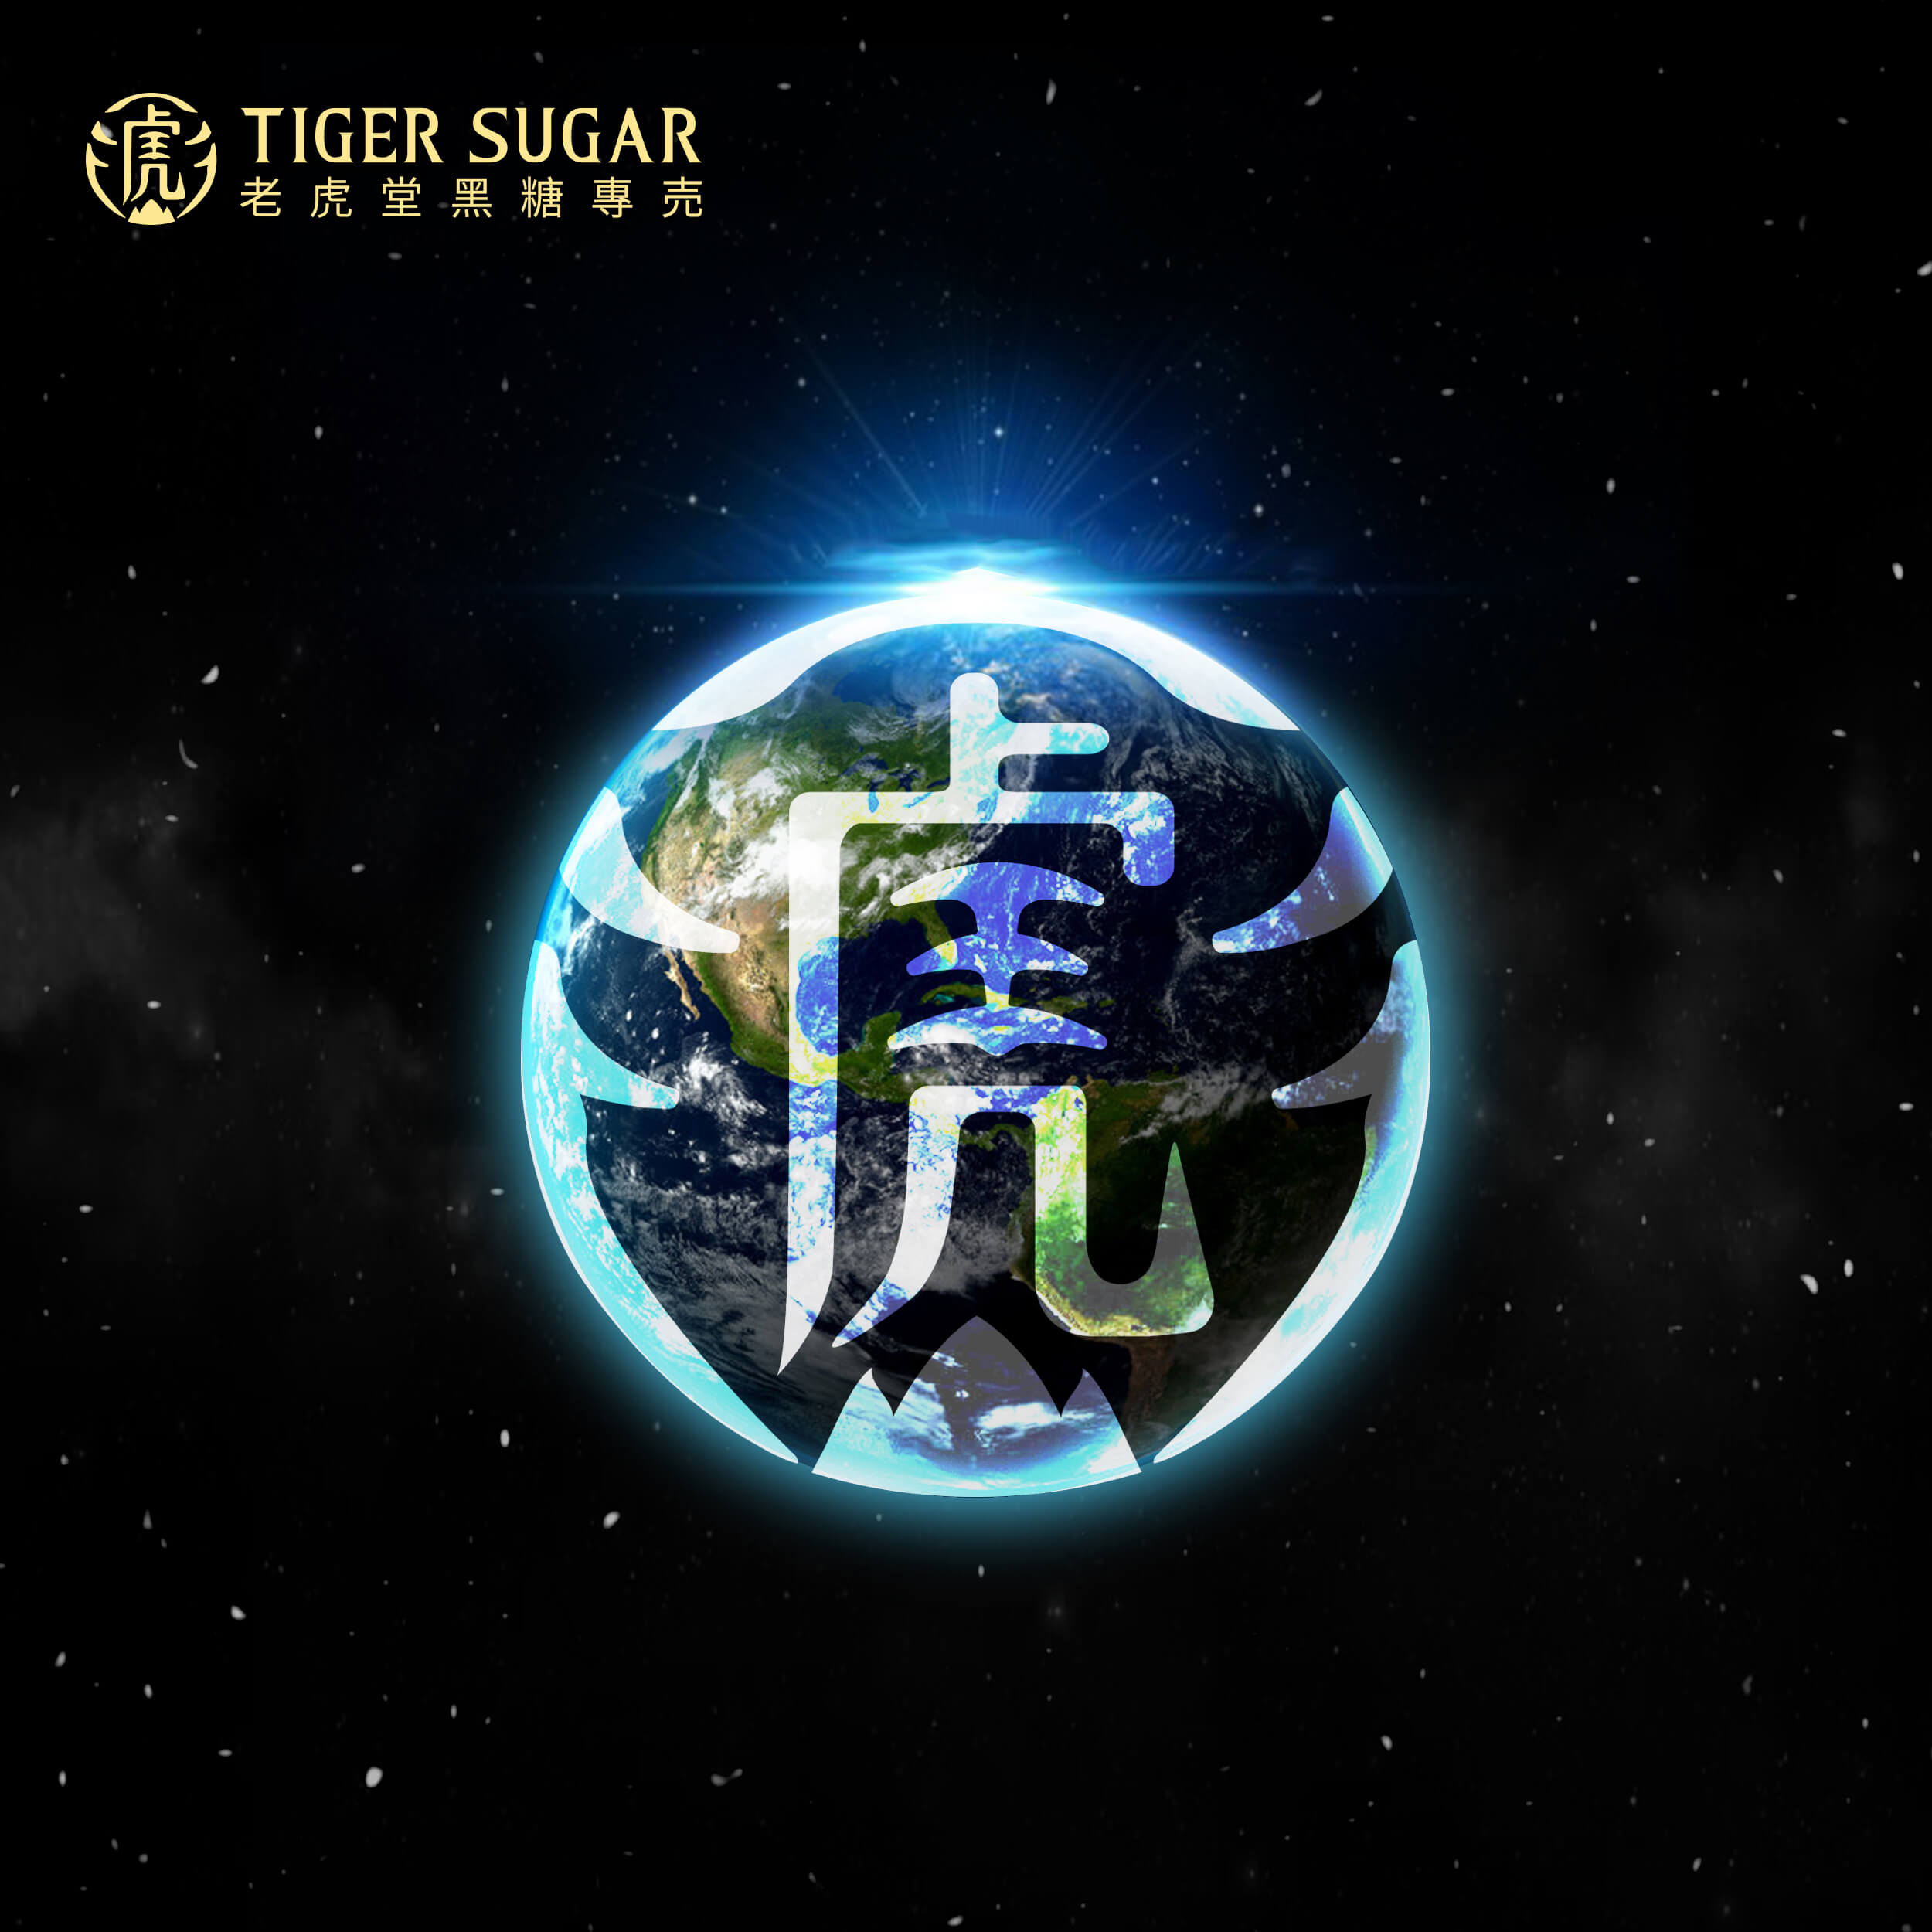 Contact Tiger Sugar